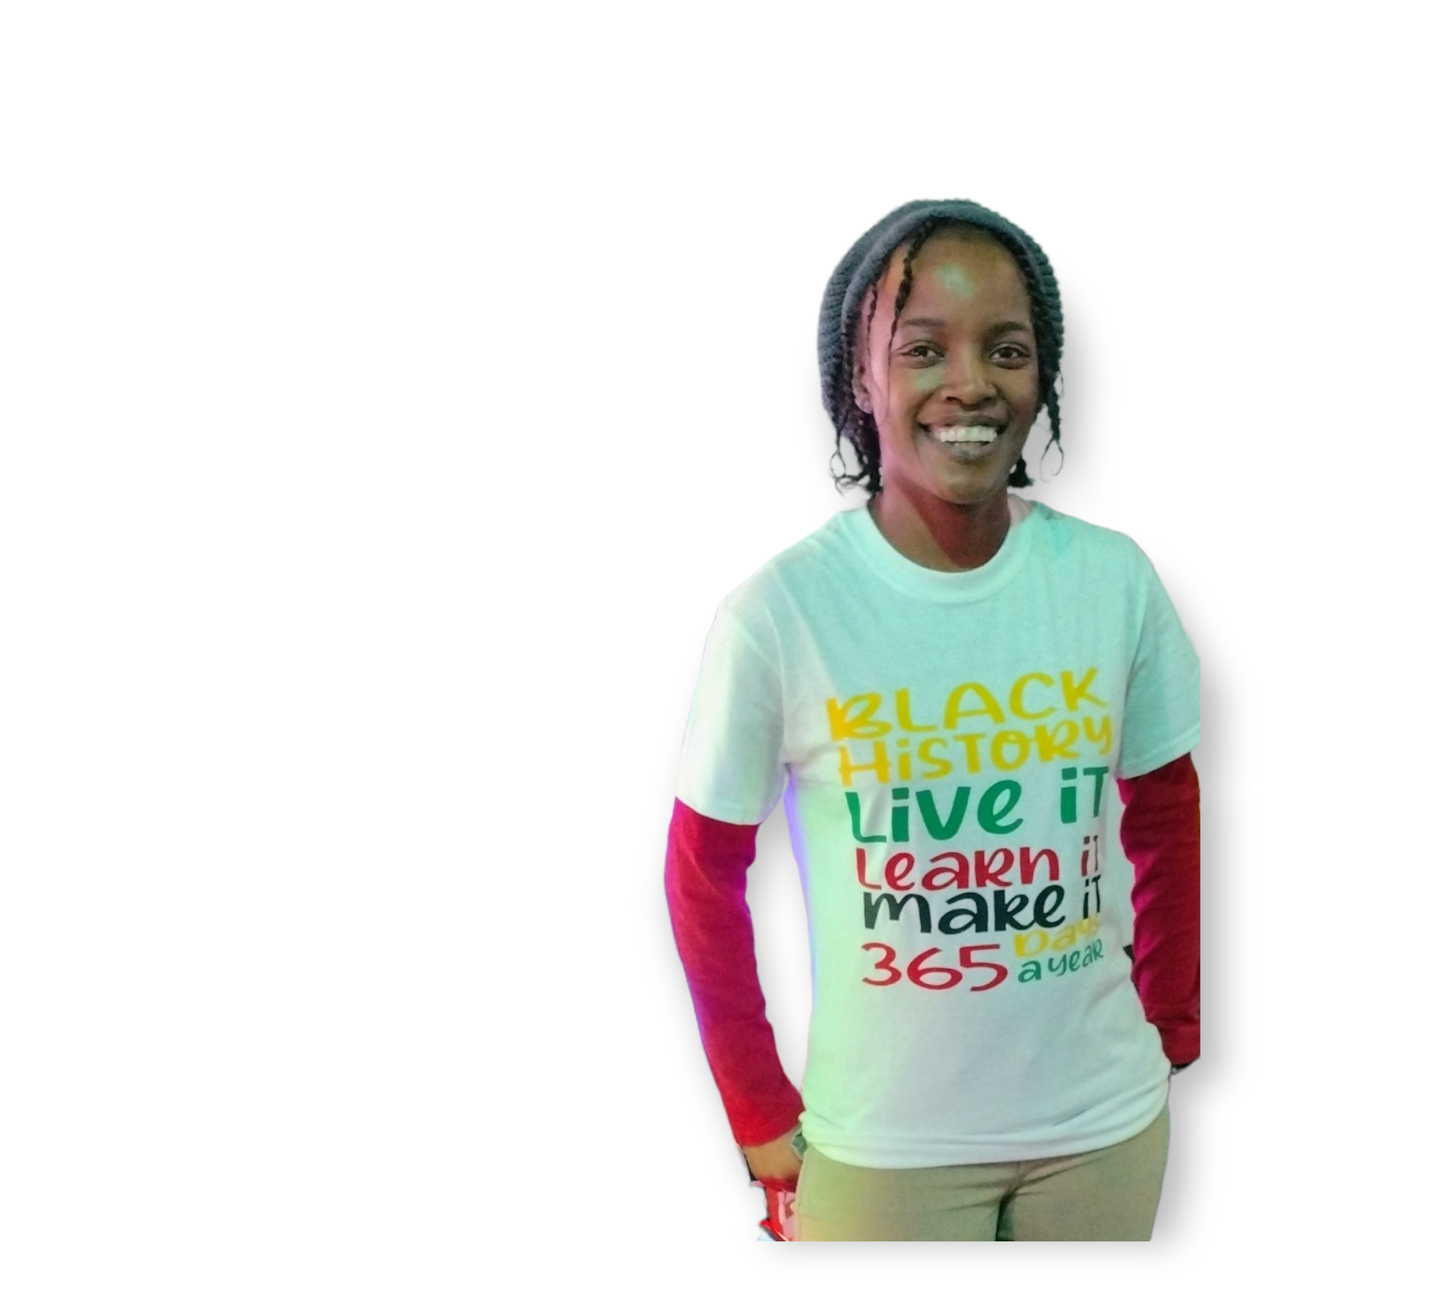 Black History Live it Learn it Make it 365 T-shirt